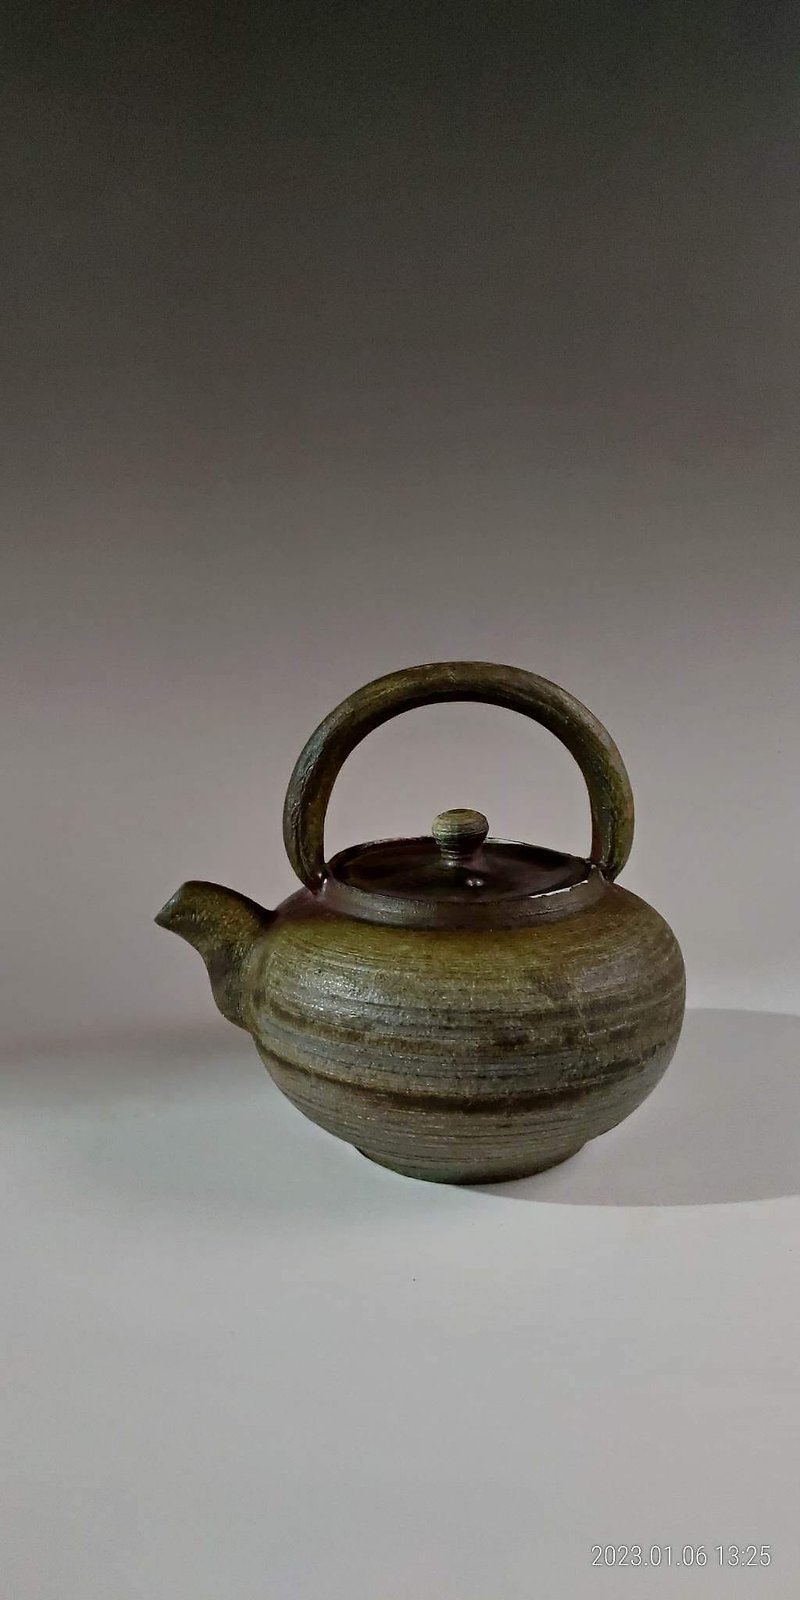 firewood teapot - ถ้วย - ดินเผา 